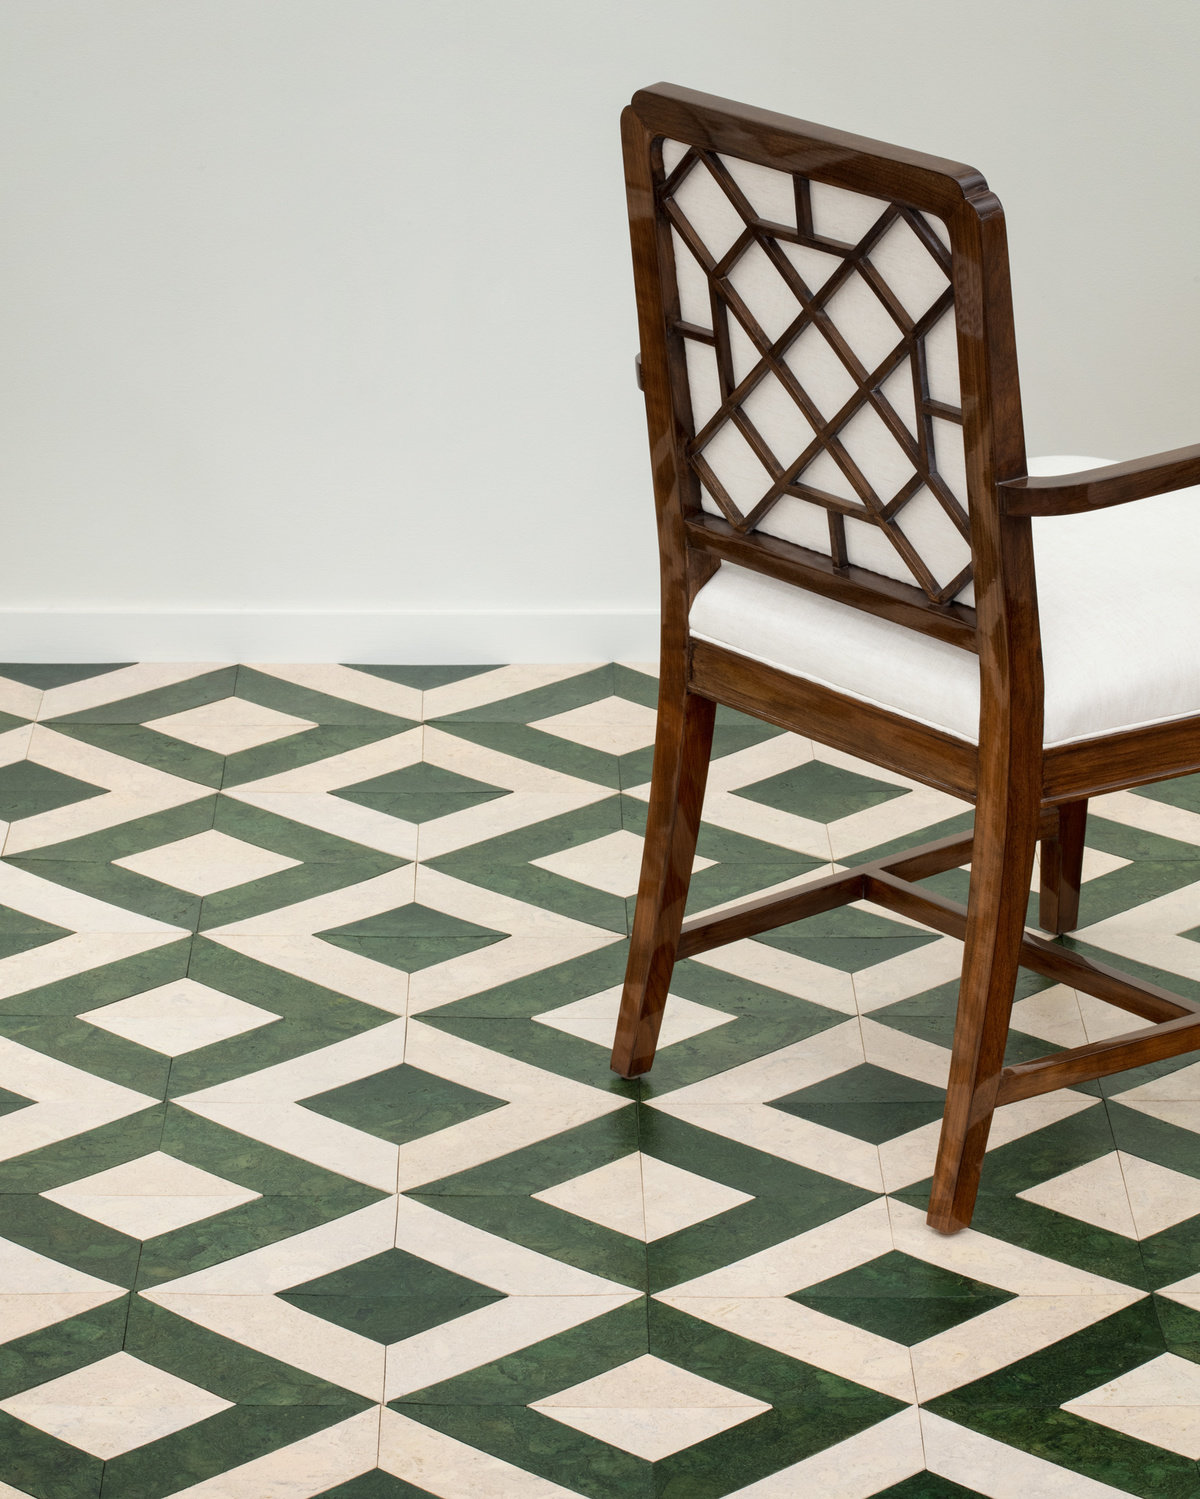 Alexa hampton belluno floor tiles 2 1200 xxx q85